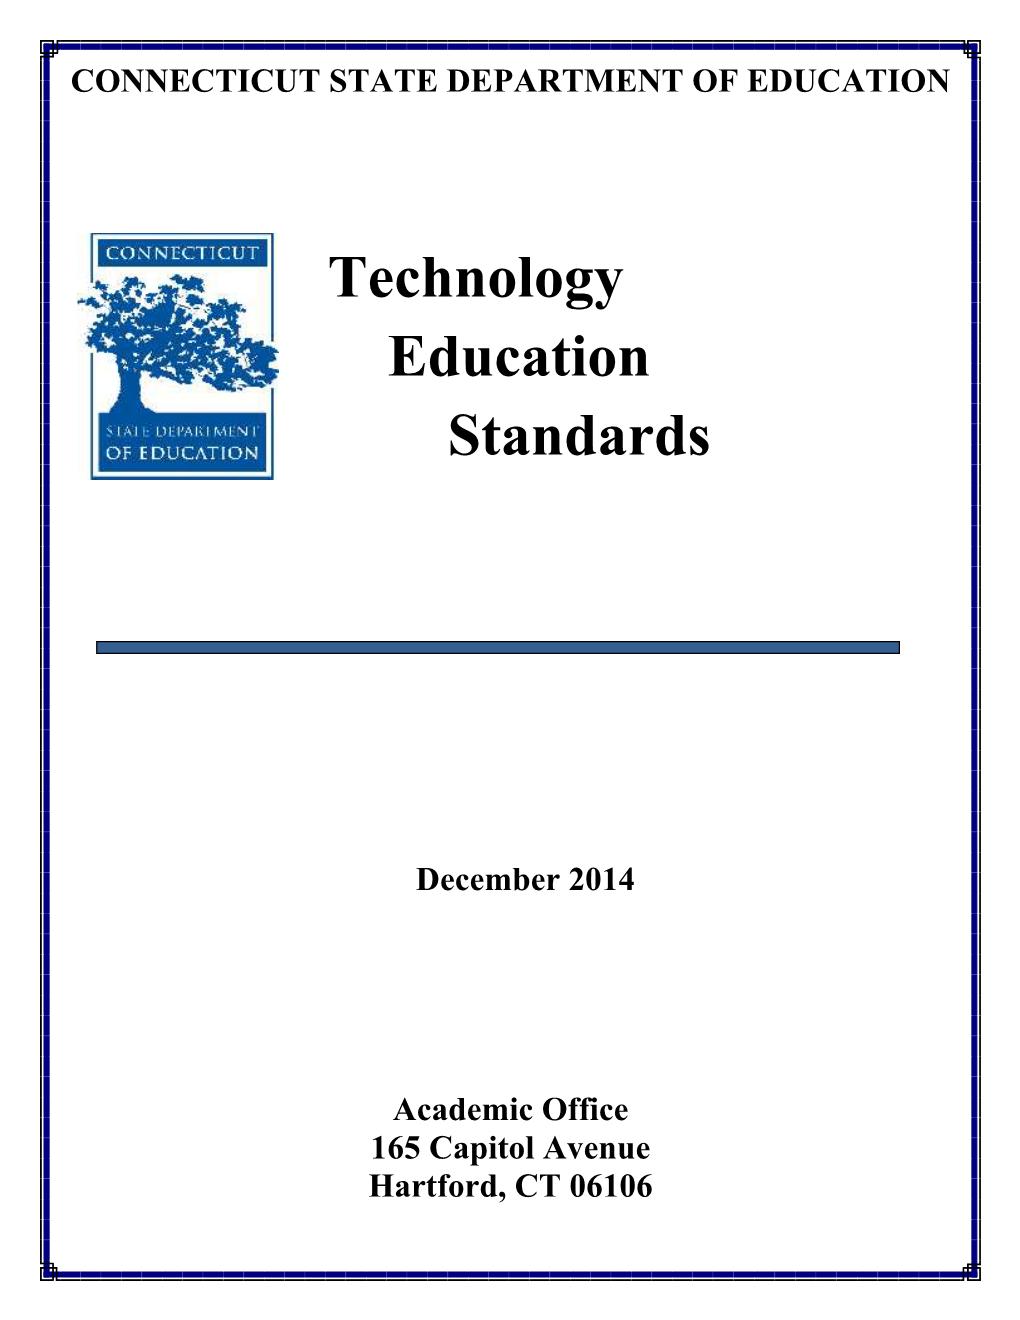 Technology Education Standards Revised December 2014